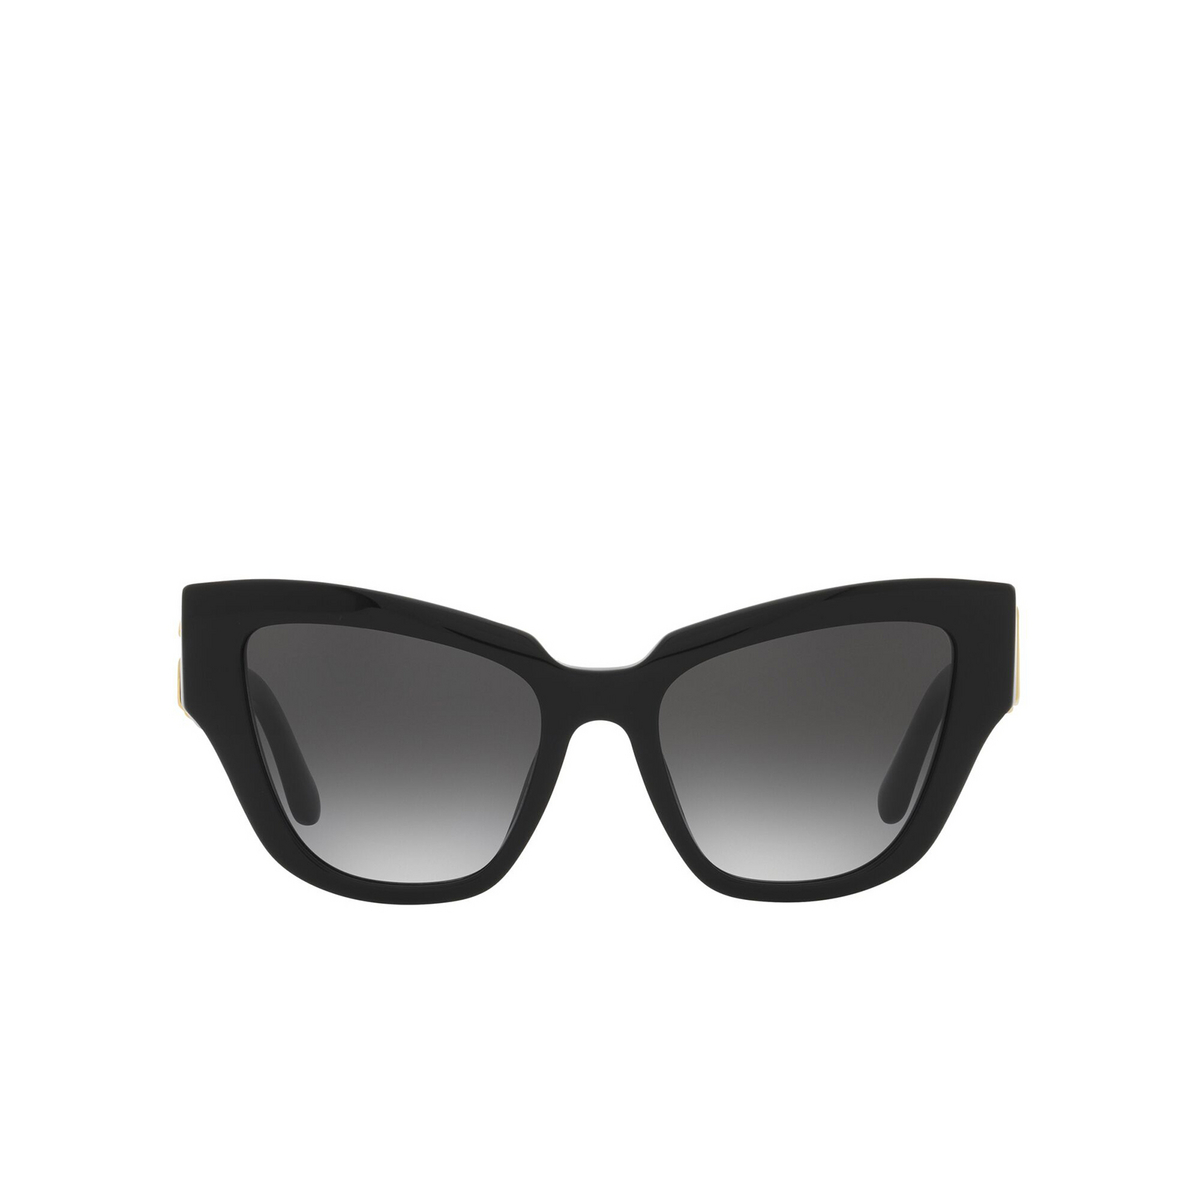 Dolce & Gabbana® Cat-eye Sunglasses: DG4404 color Black 501/8G - front view.